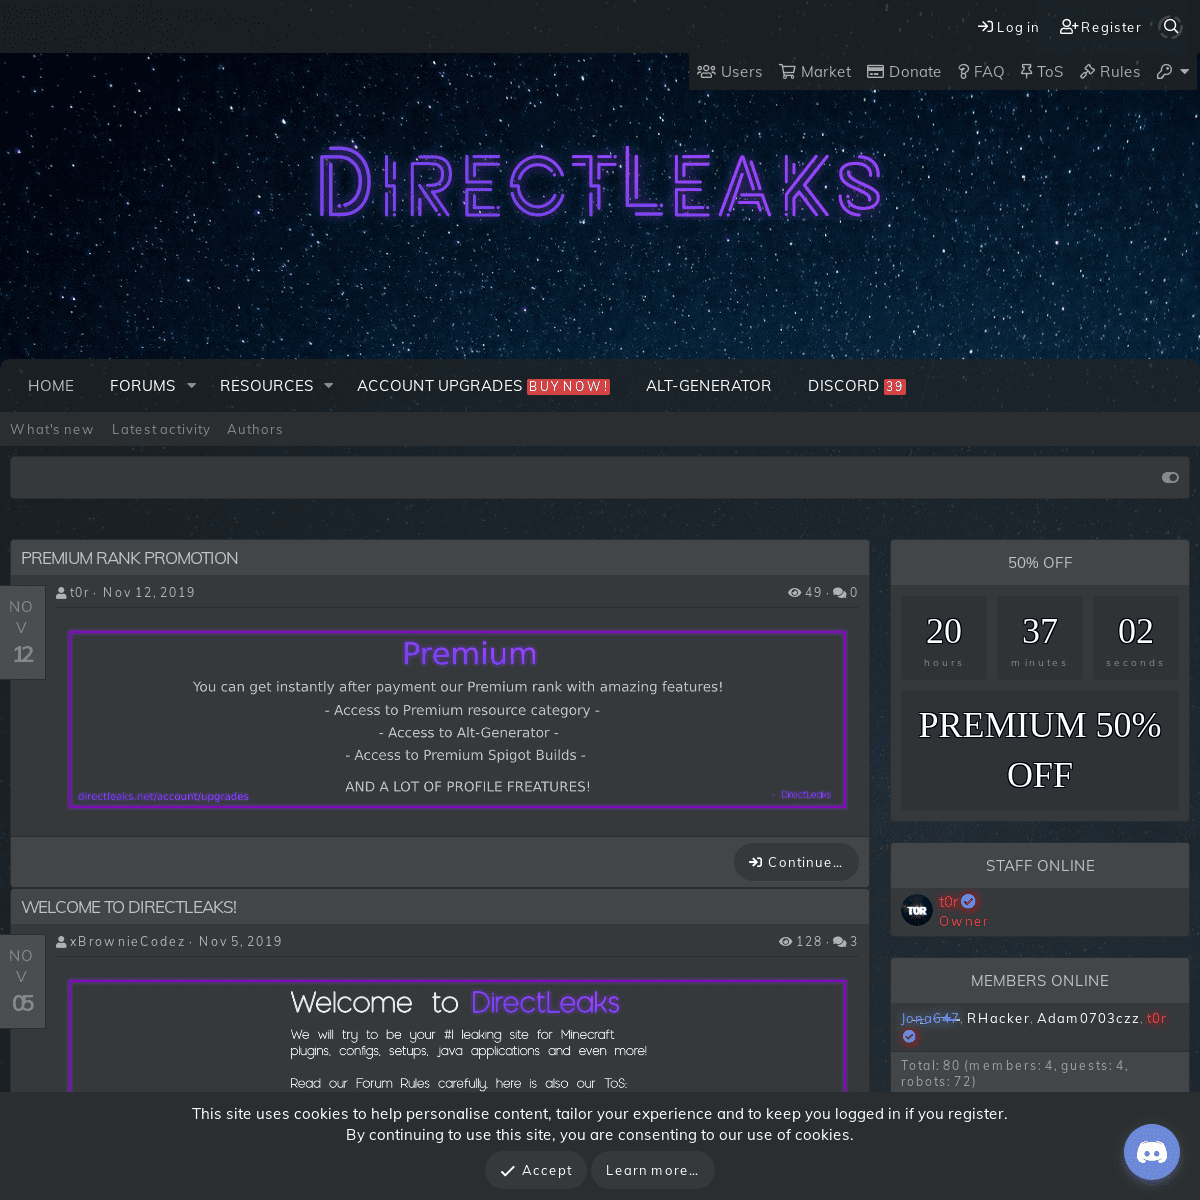 A complete backup of directleaks.net